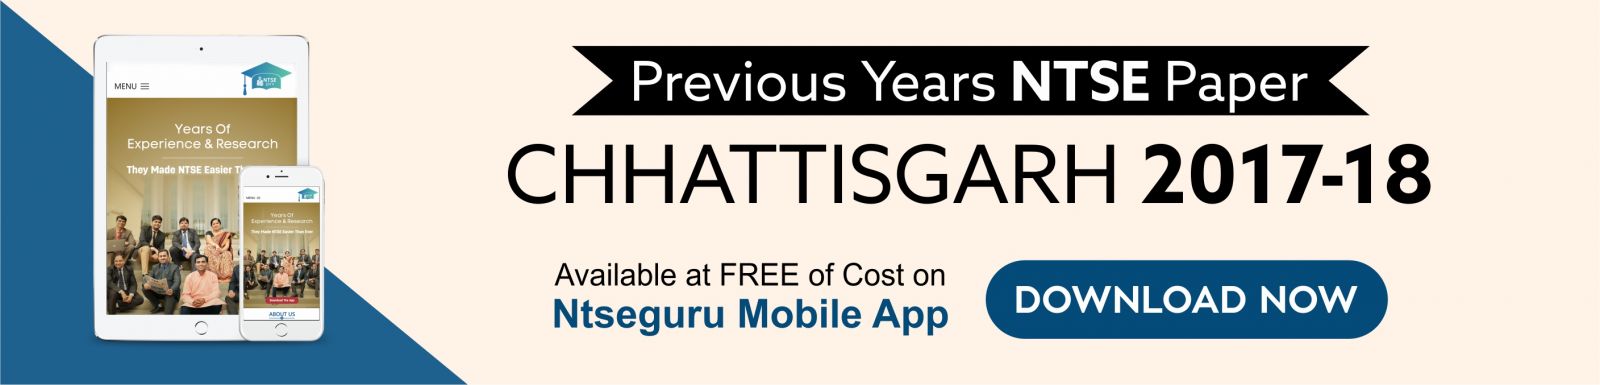 NTSE Previous Year Papers Chhattisgarh 2017-18